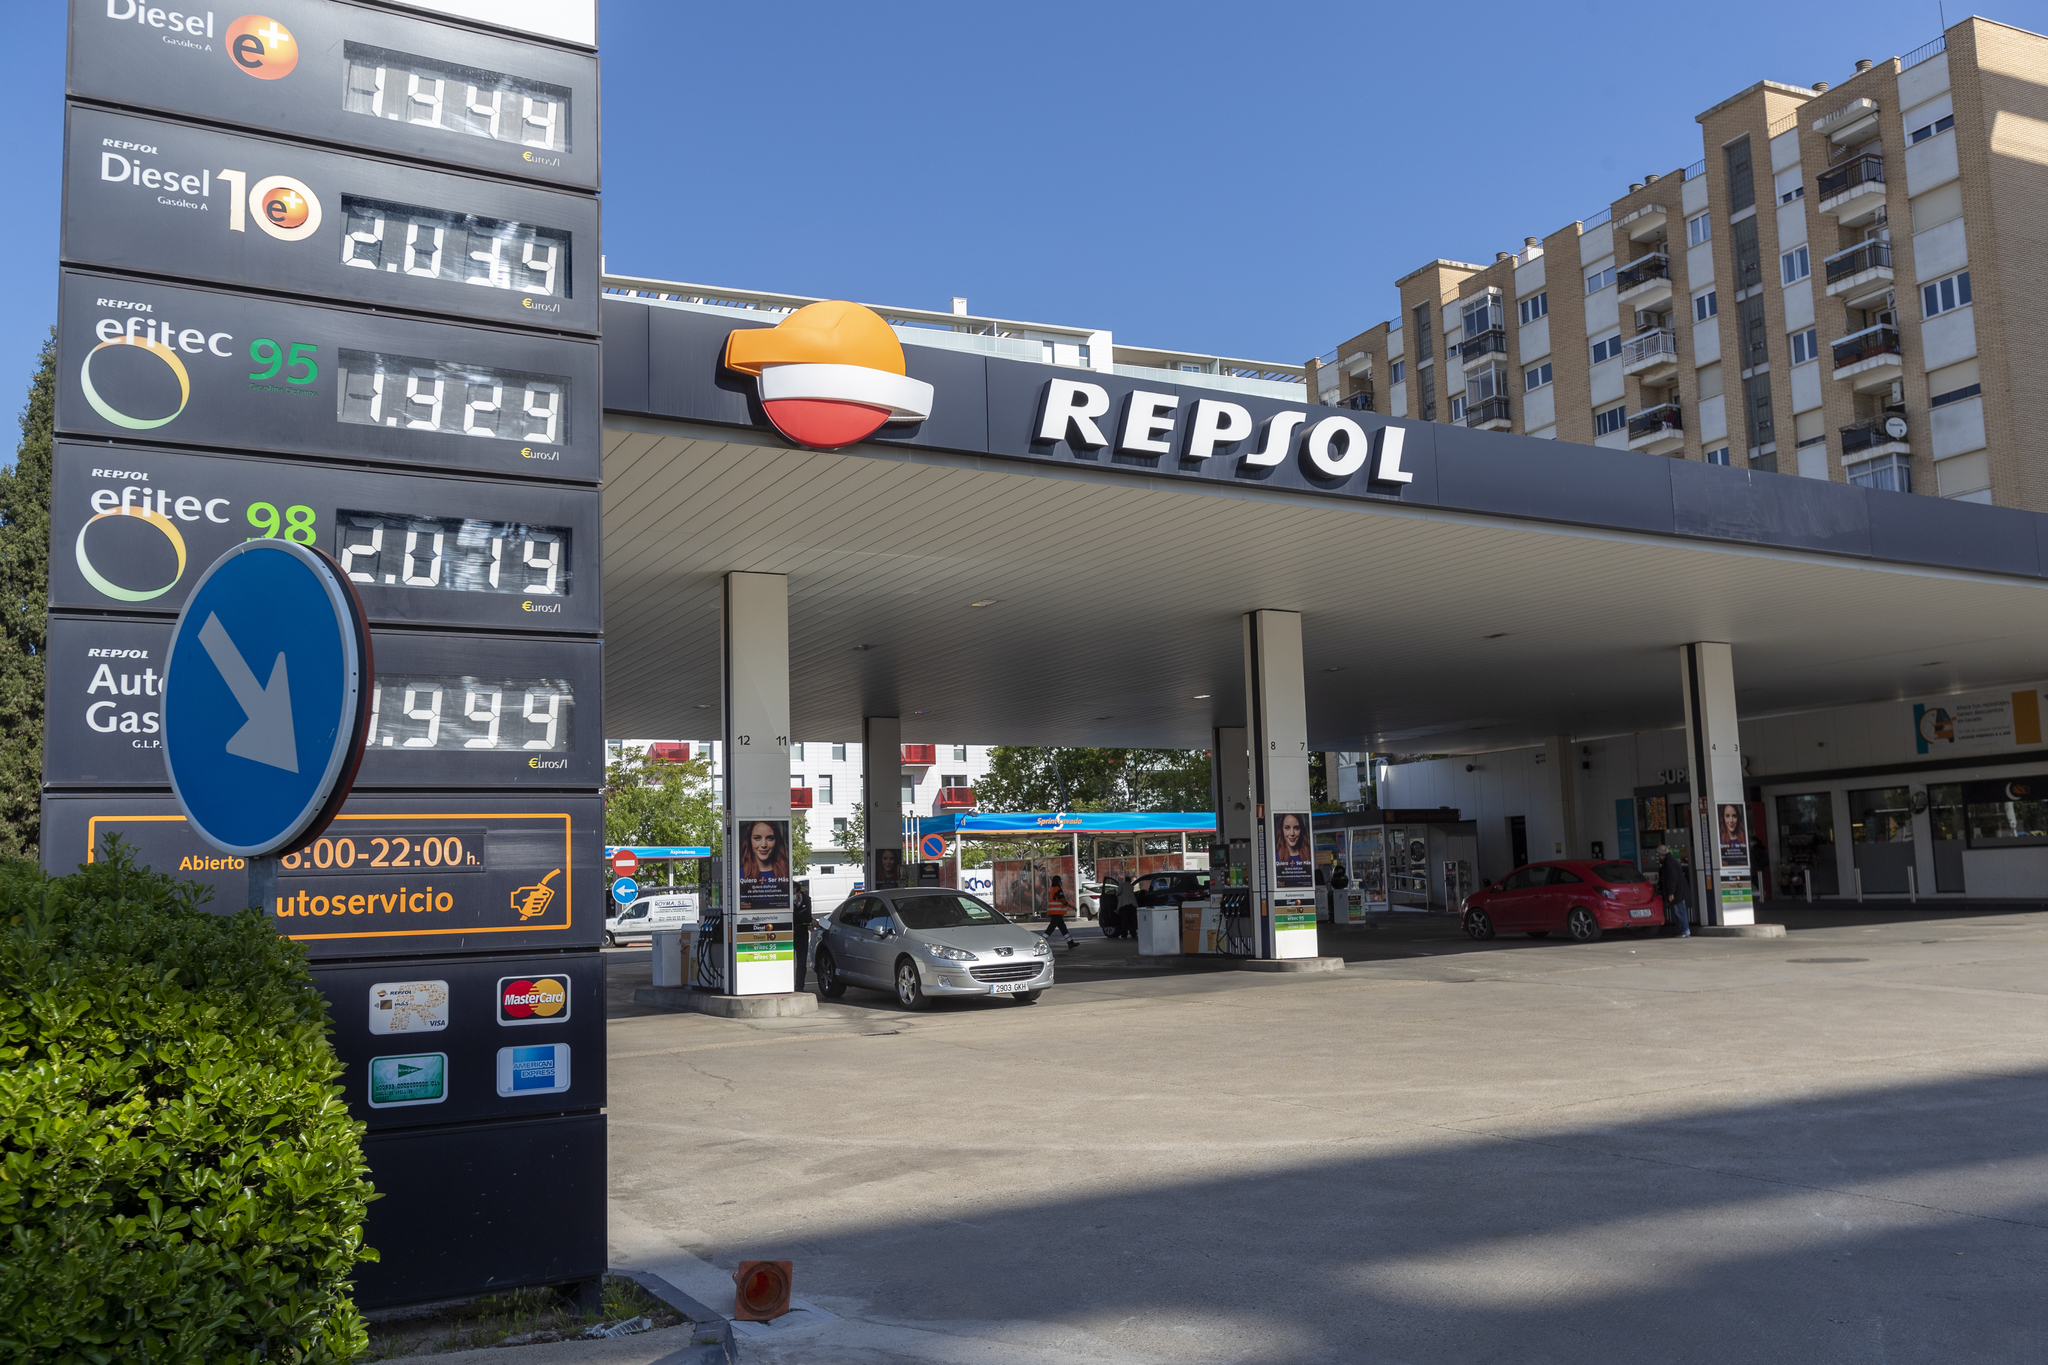 precios combustibles - gasolina - diesel - record historico - Nadia Calviño - 20 centimos